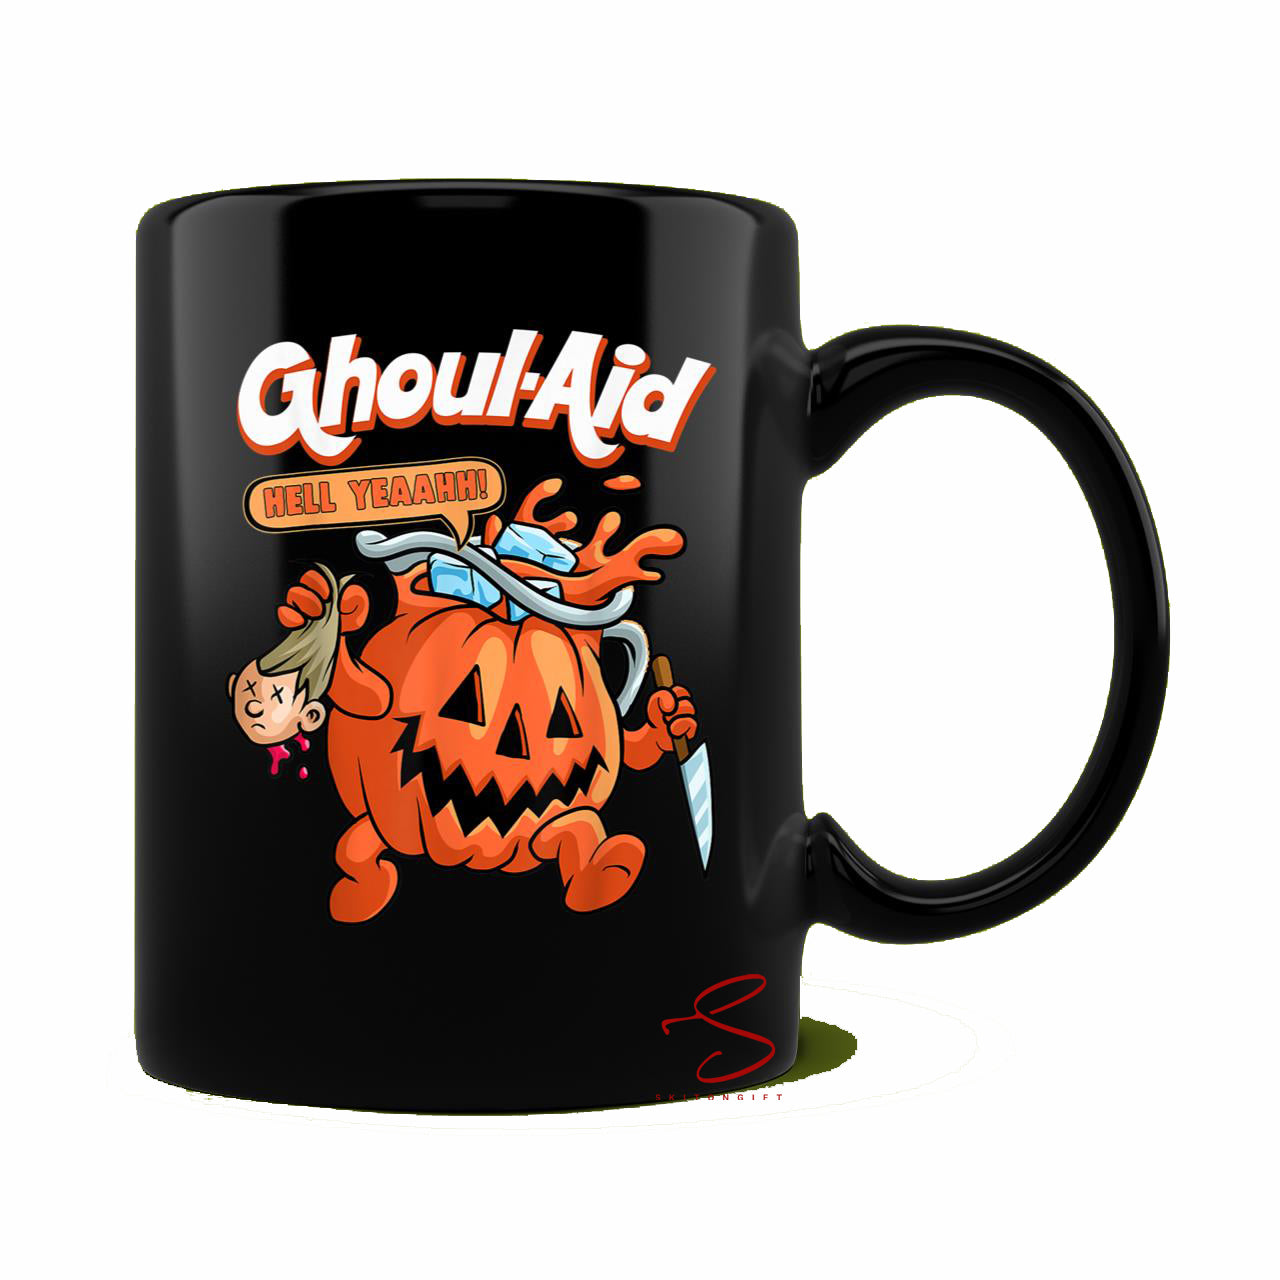 Skitongift Spooky Ceramic Novelty Coffee Mug Funny Halloween Mug Cool